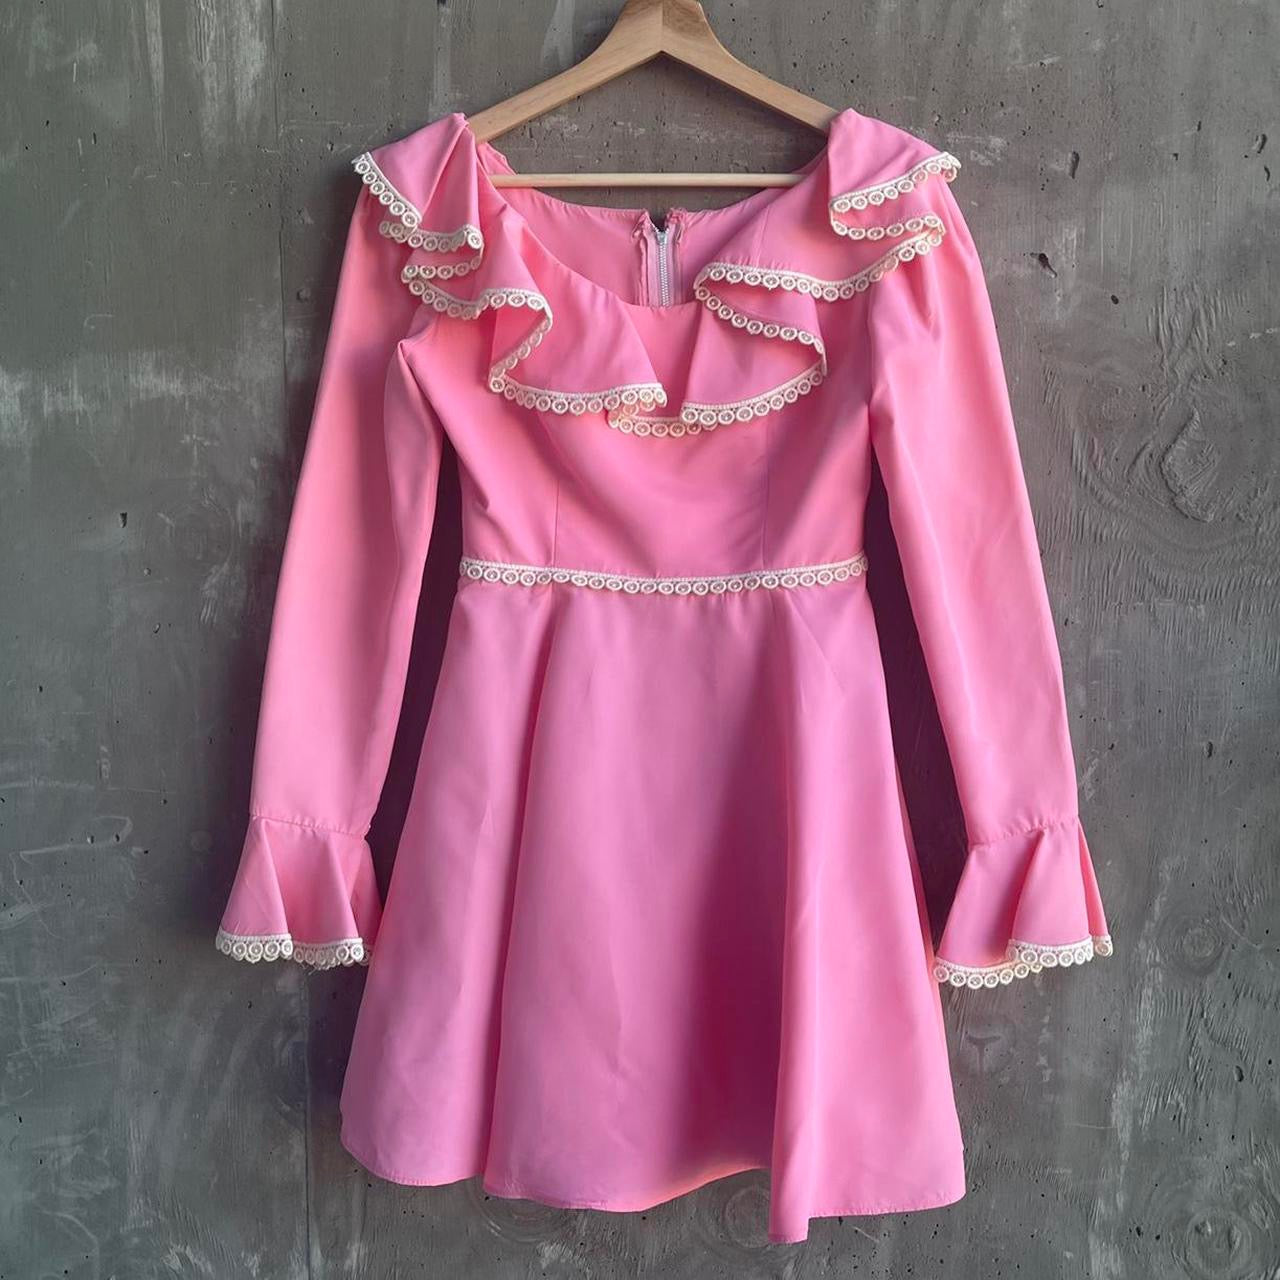 Vintage Prairie Cottagecore Mini Dress in Pink 70’s